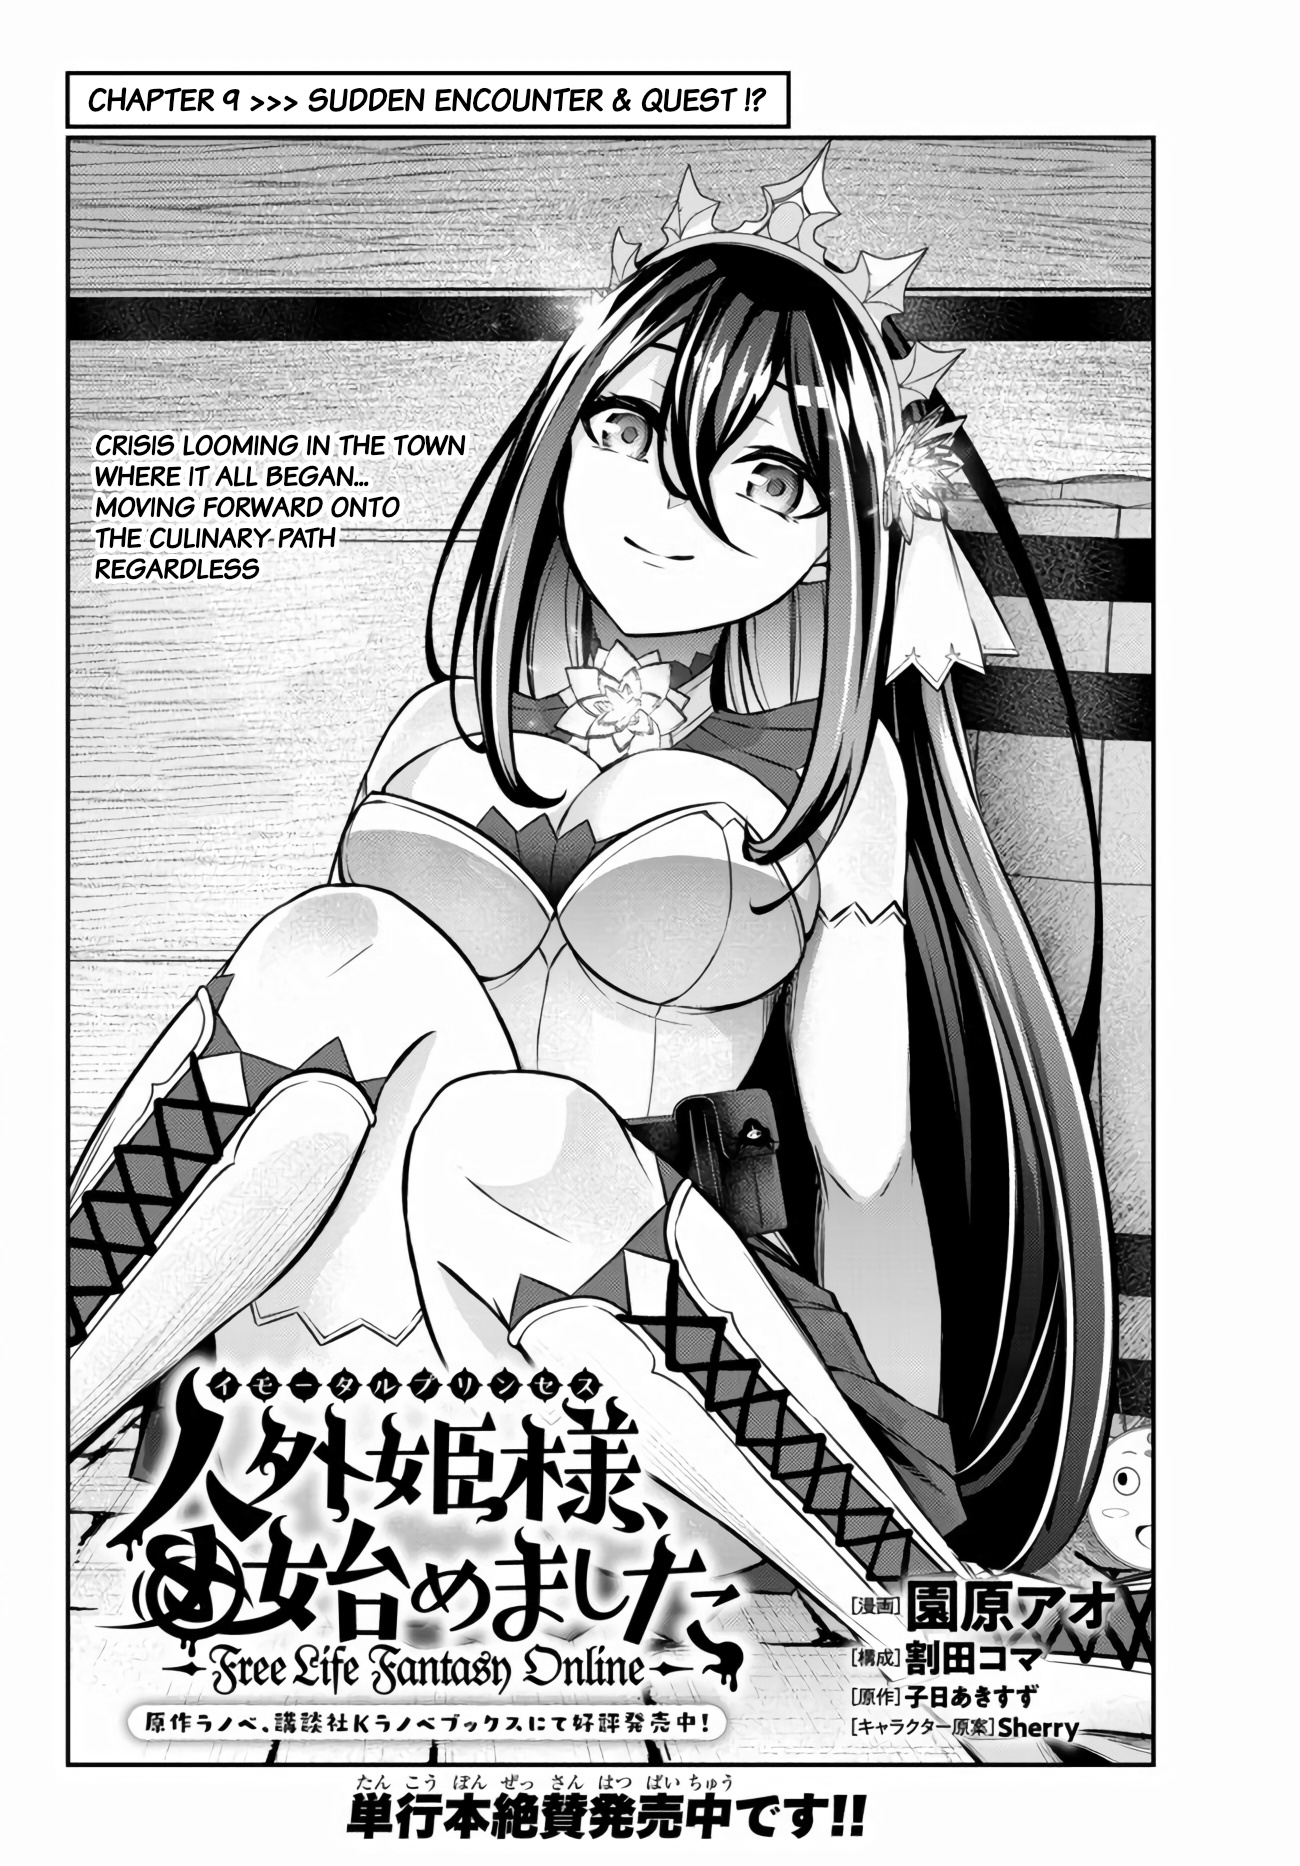 Jingai Hime Sama, Hajimemashita - Free Life Fantasy Online Vol.2 Chapter 9: Sudden Encounter & Quest !? - Picture 2